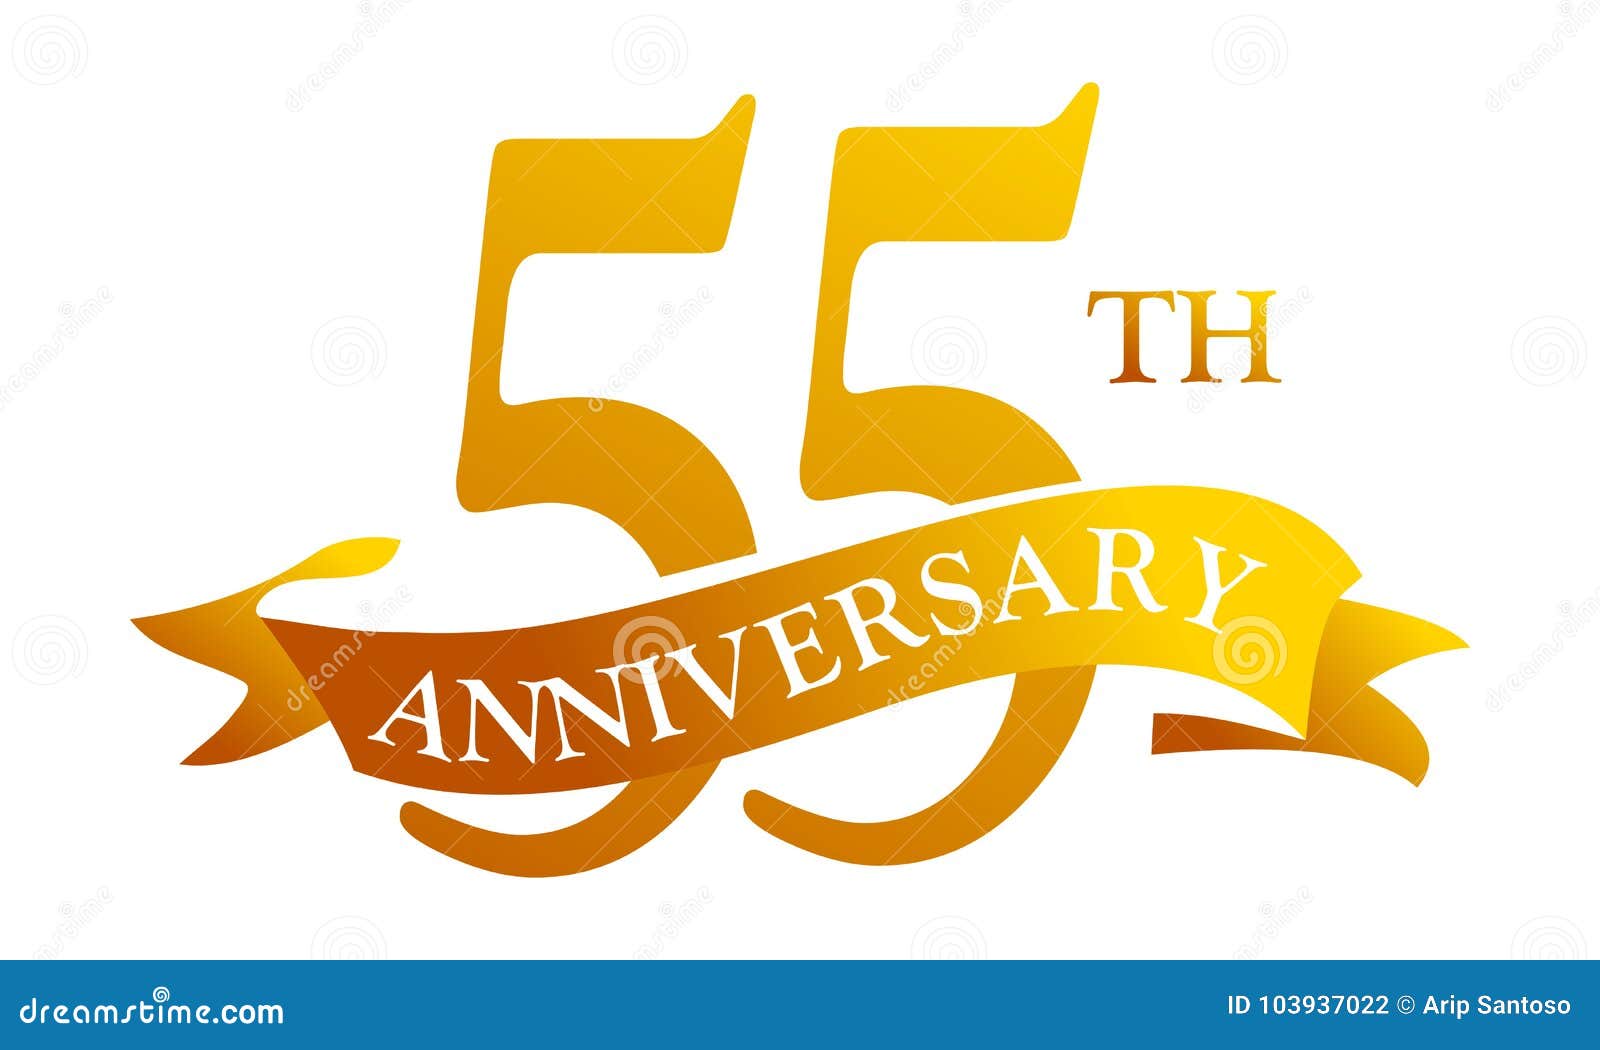 55 Year Ribbon Anniversary stock vector. Illustration of sign - 103937022